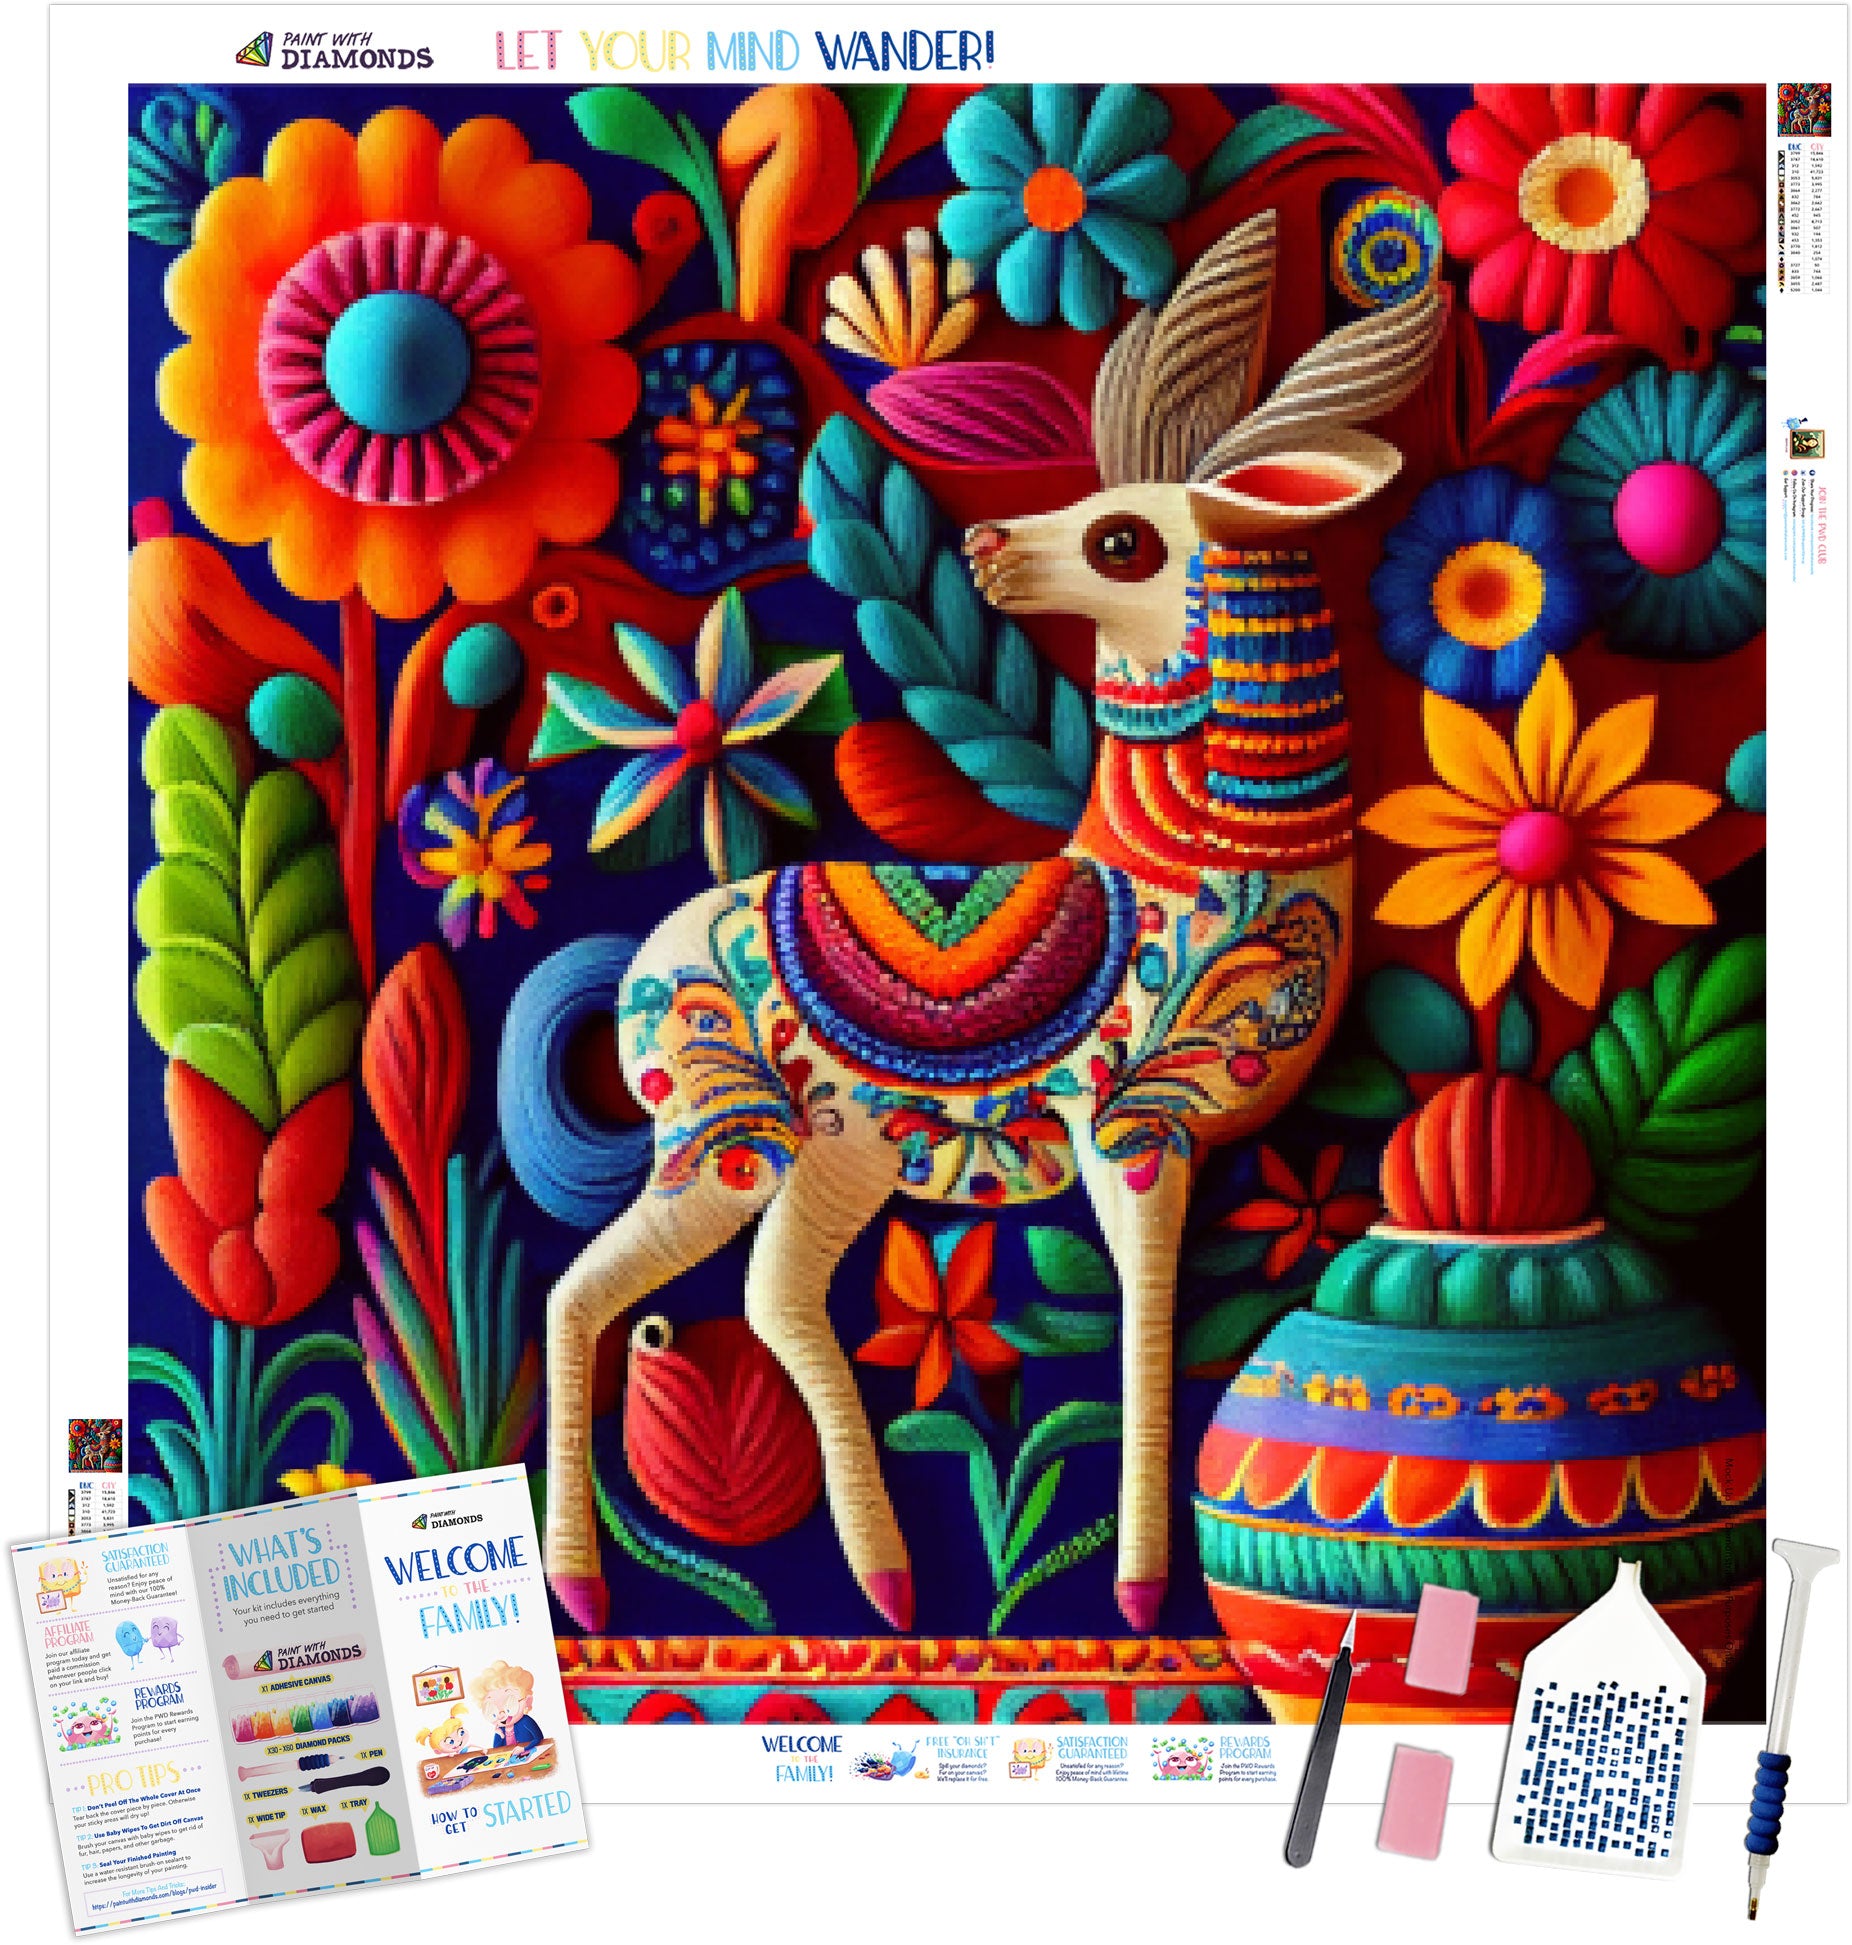 Colorful Mexican Llama